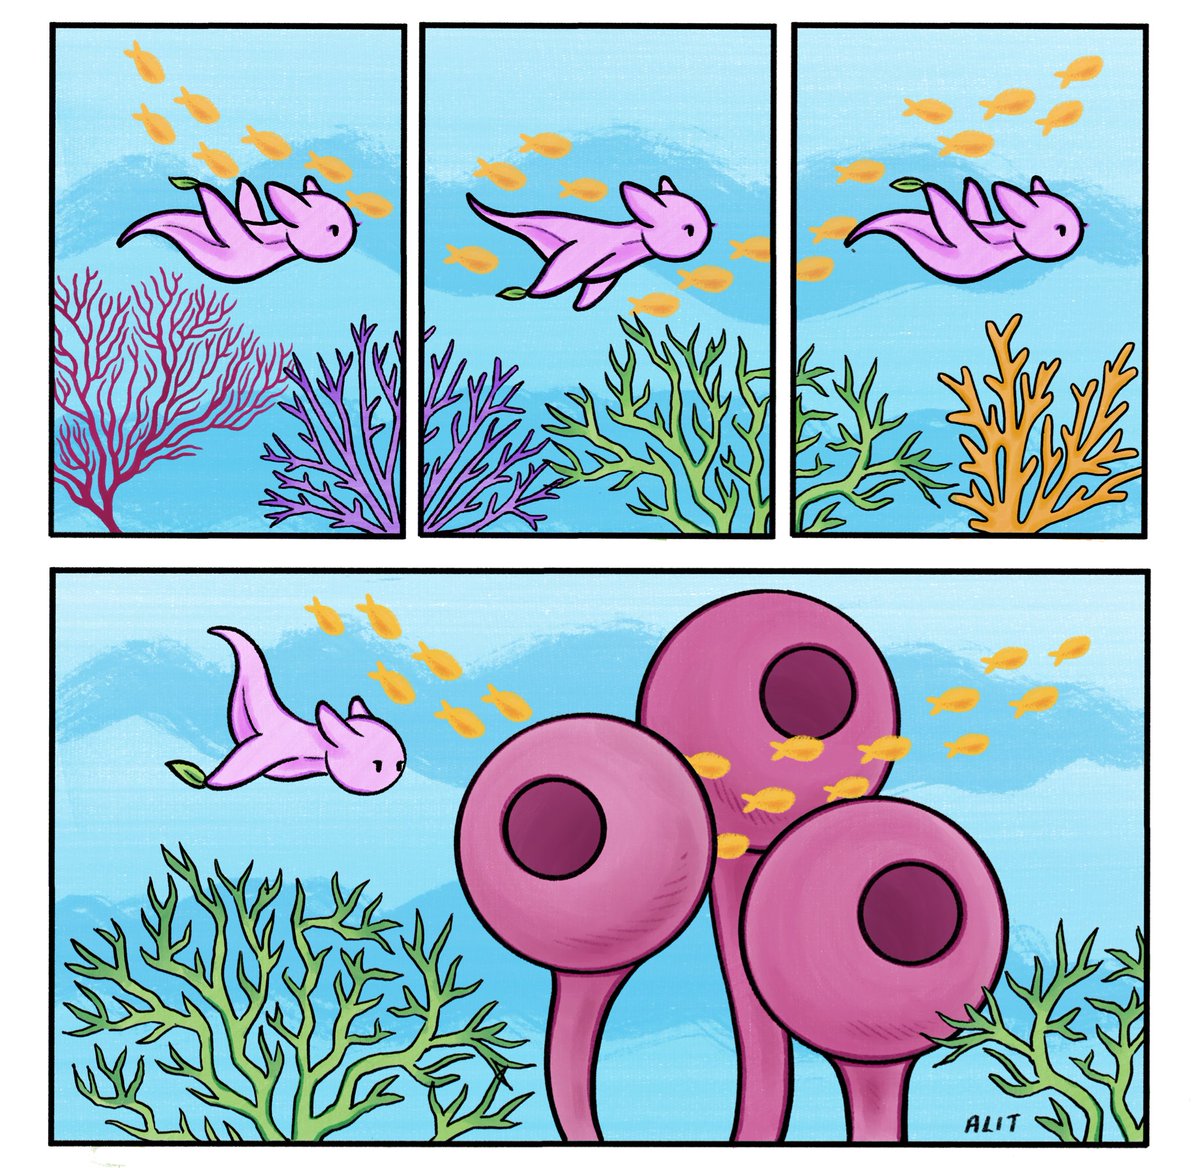 Life is better under the sea 🌊 

#graphicnovel #digitalpainting #watercolor #marinebiology #animalart #illustrationartists #procreateart @procreate #underwater